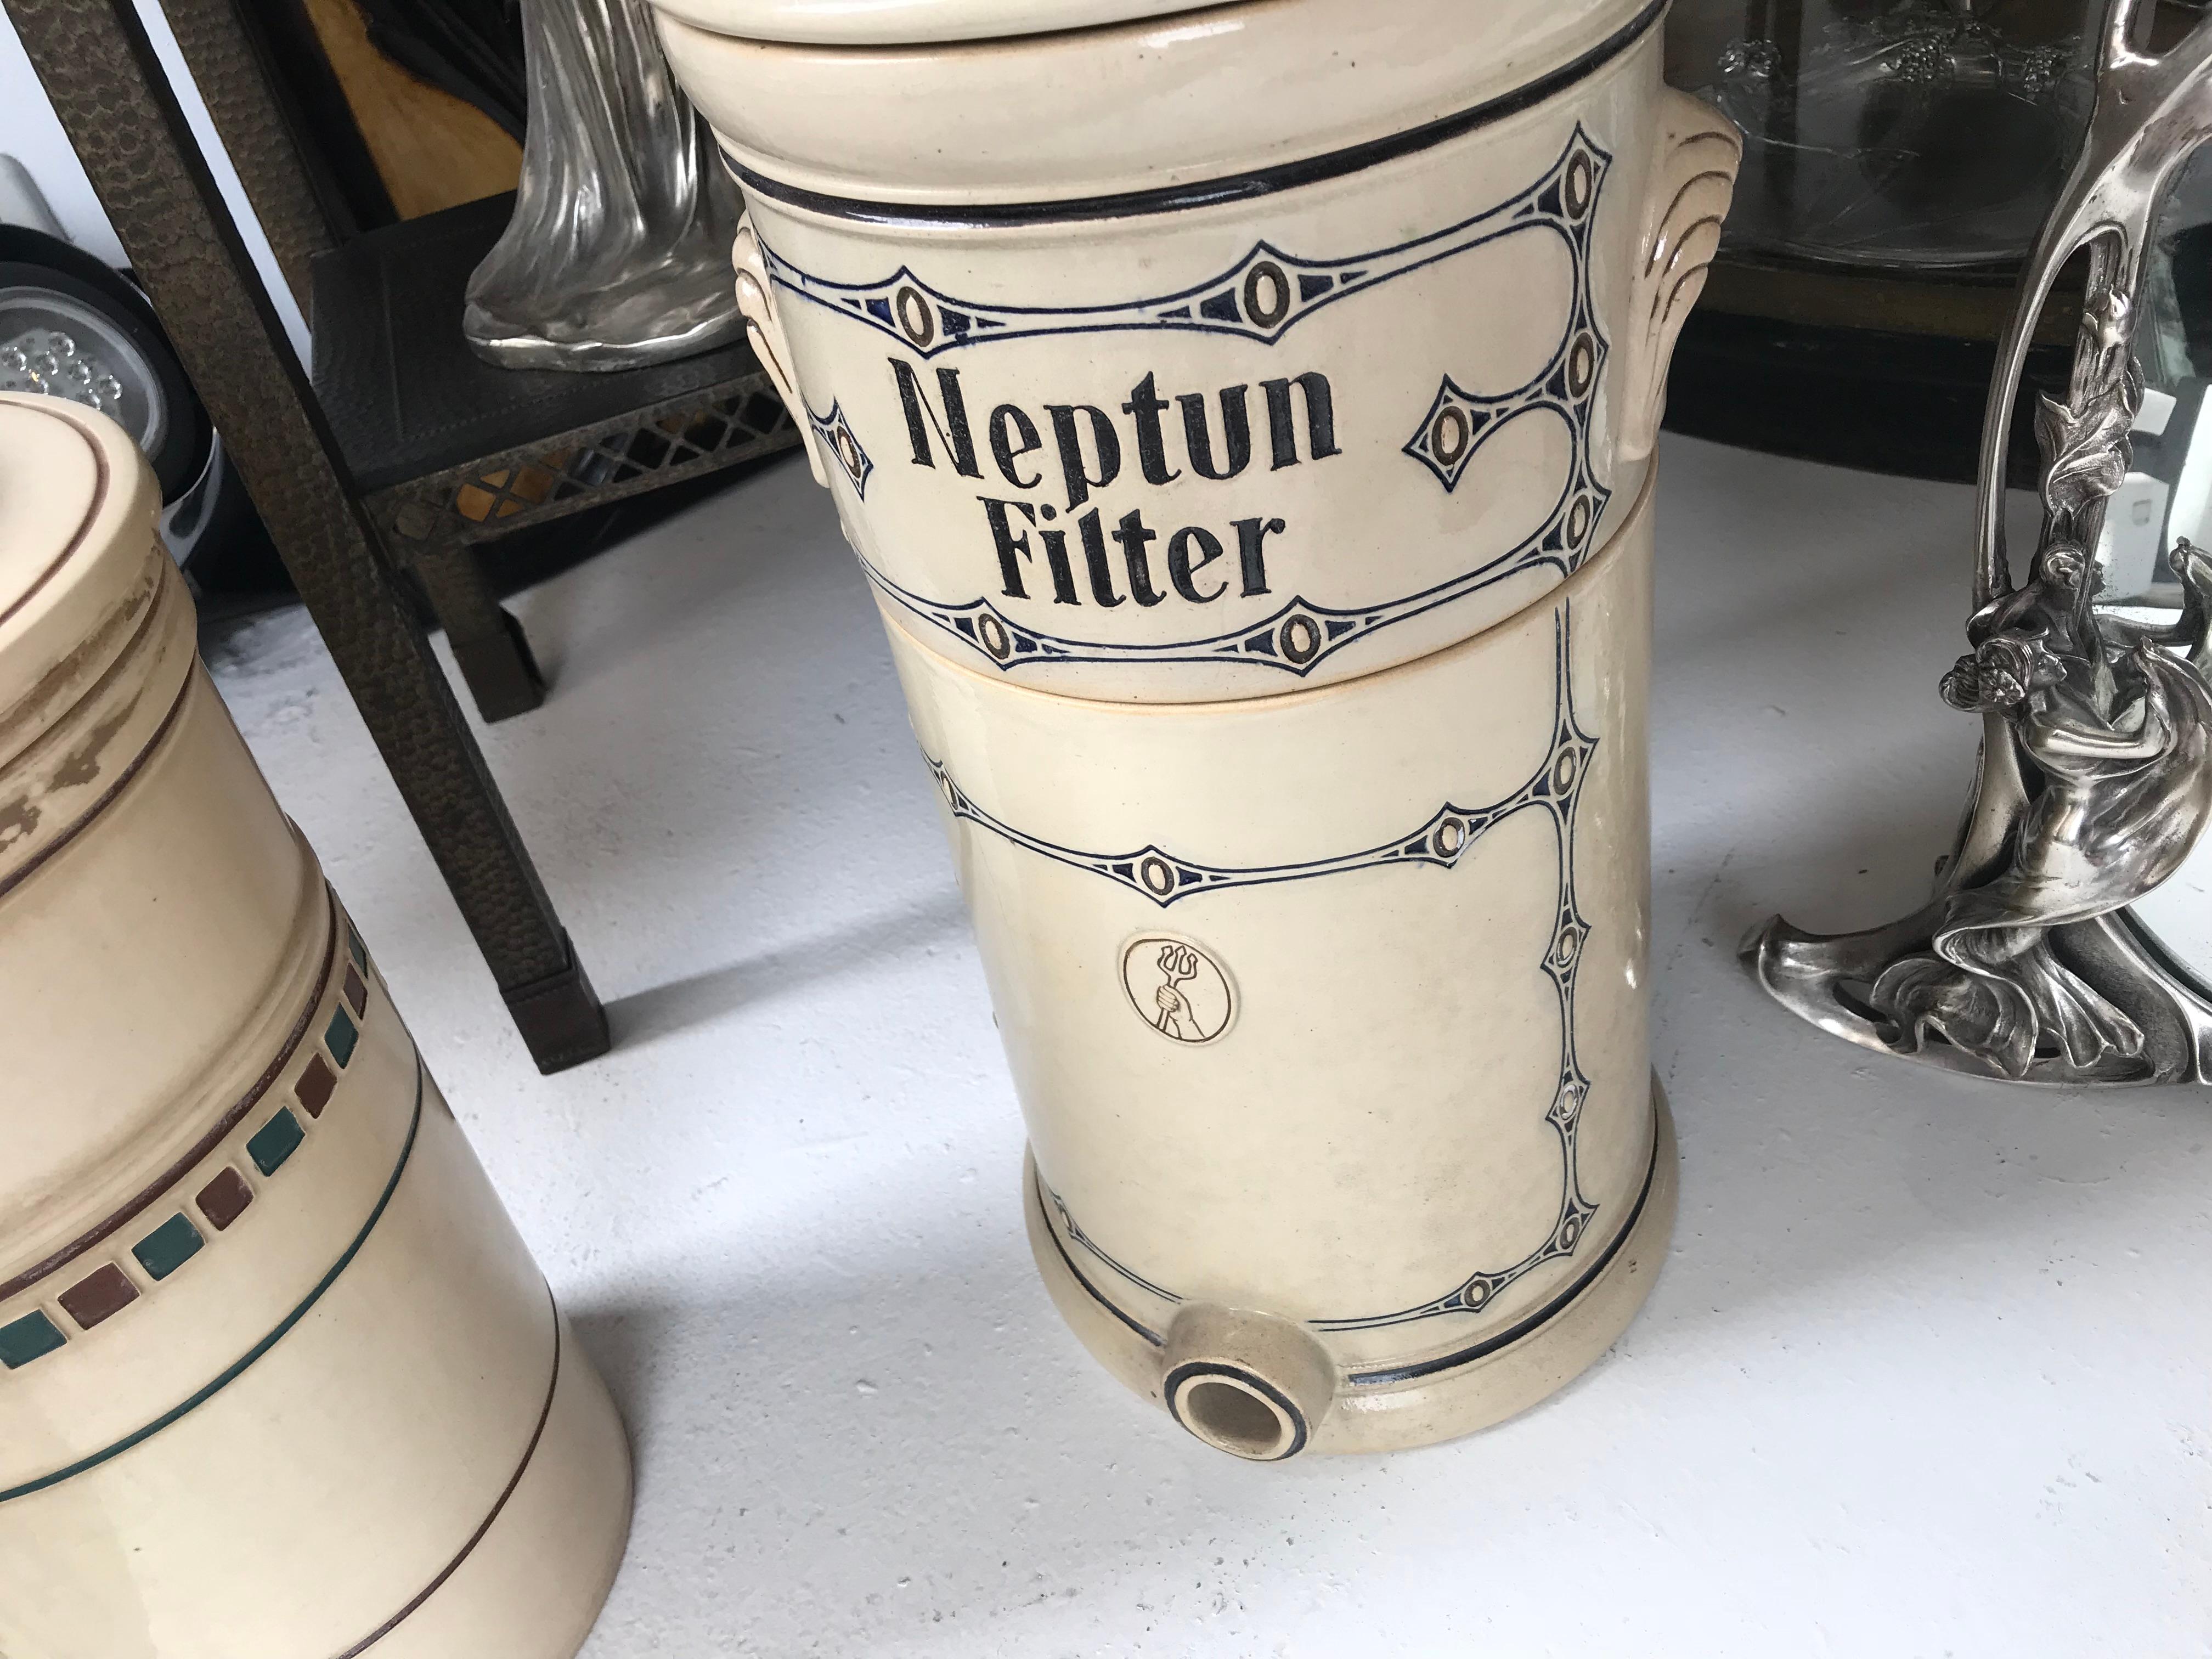 Filter Neptun, Jugendstil, Art Nouveau, Liberté, 1900 en vente 5